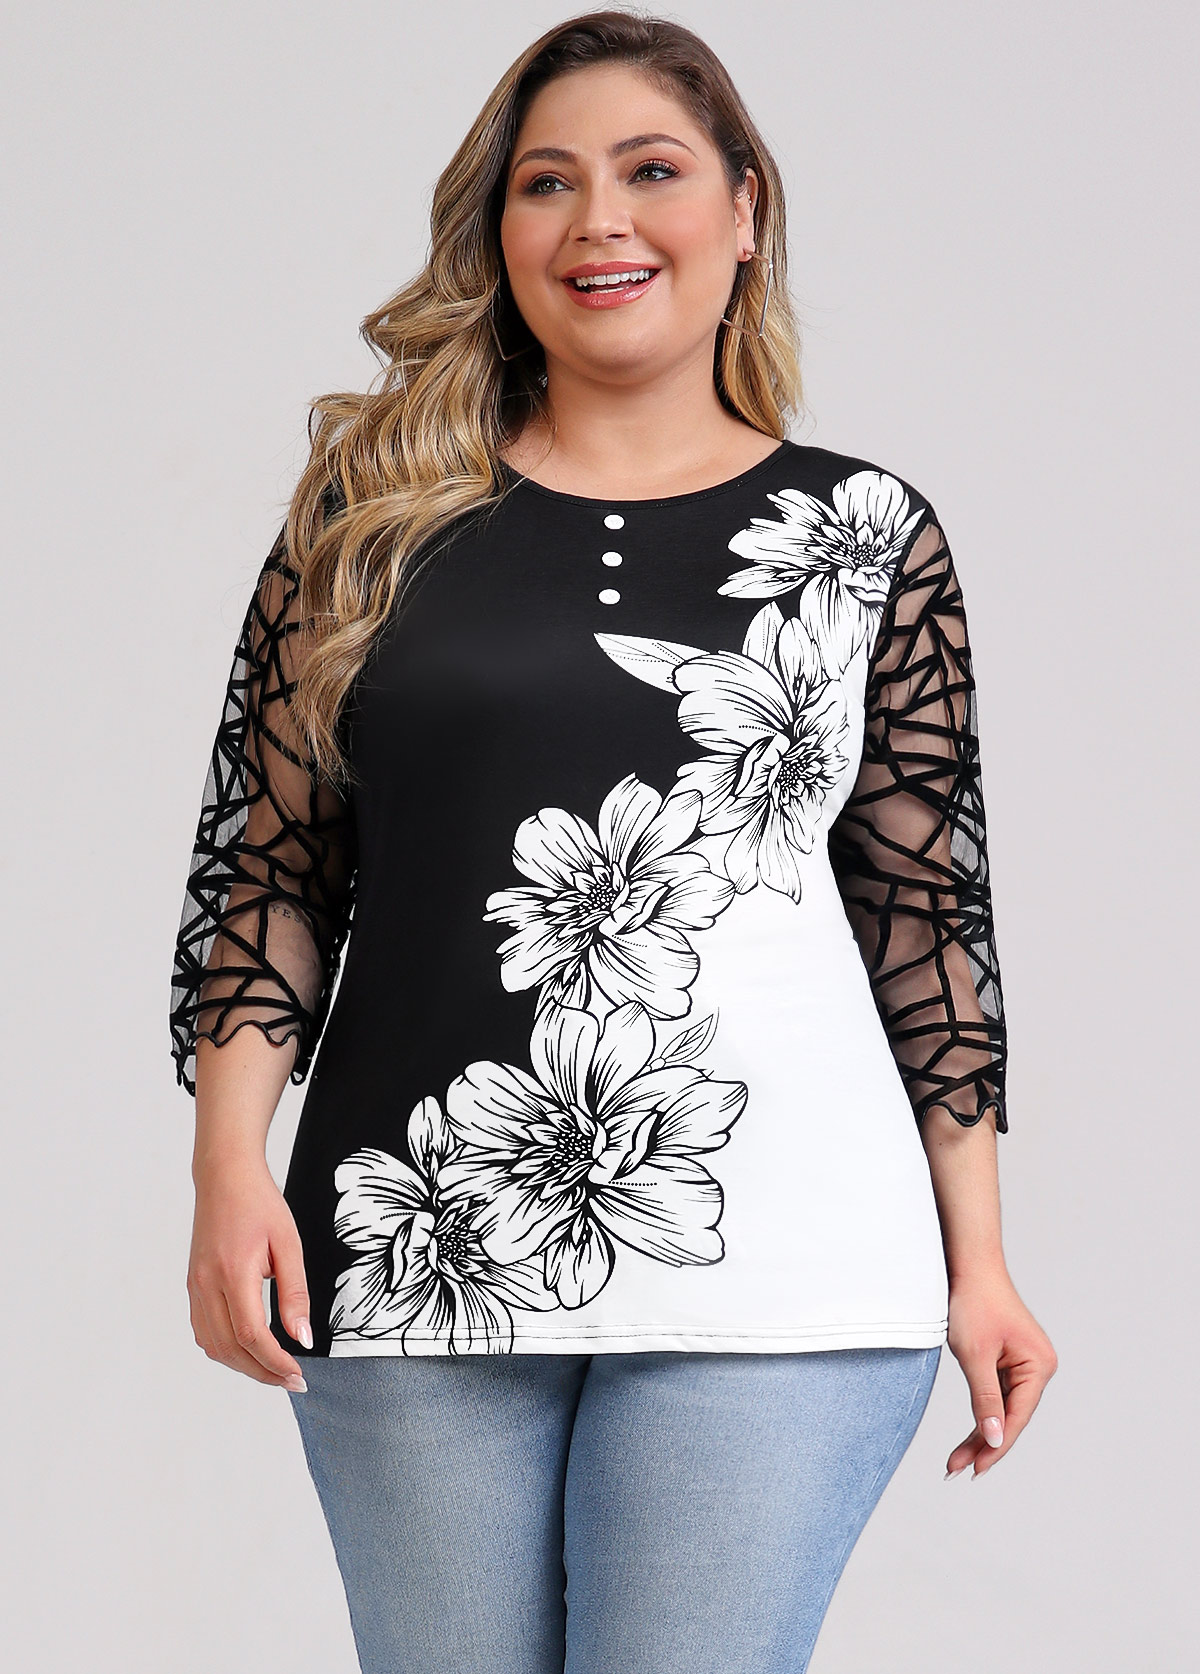 Mesh Stitching Floral Print Black Plus Size T Shirt